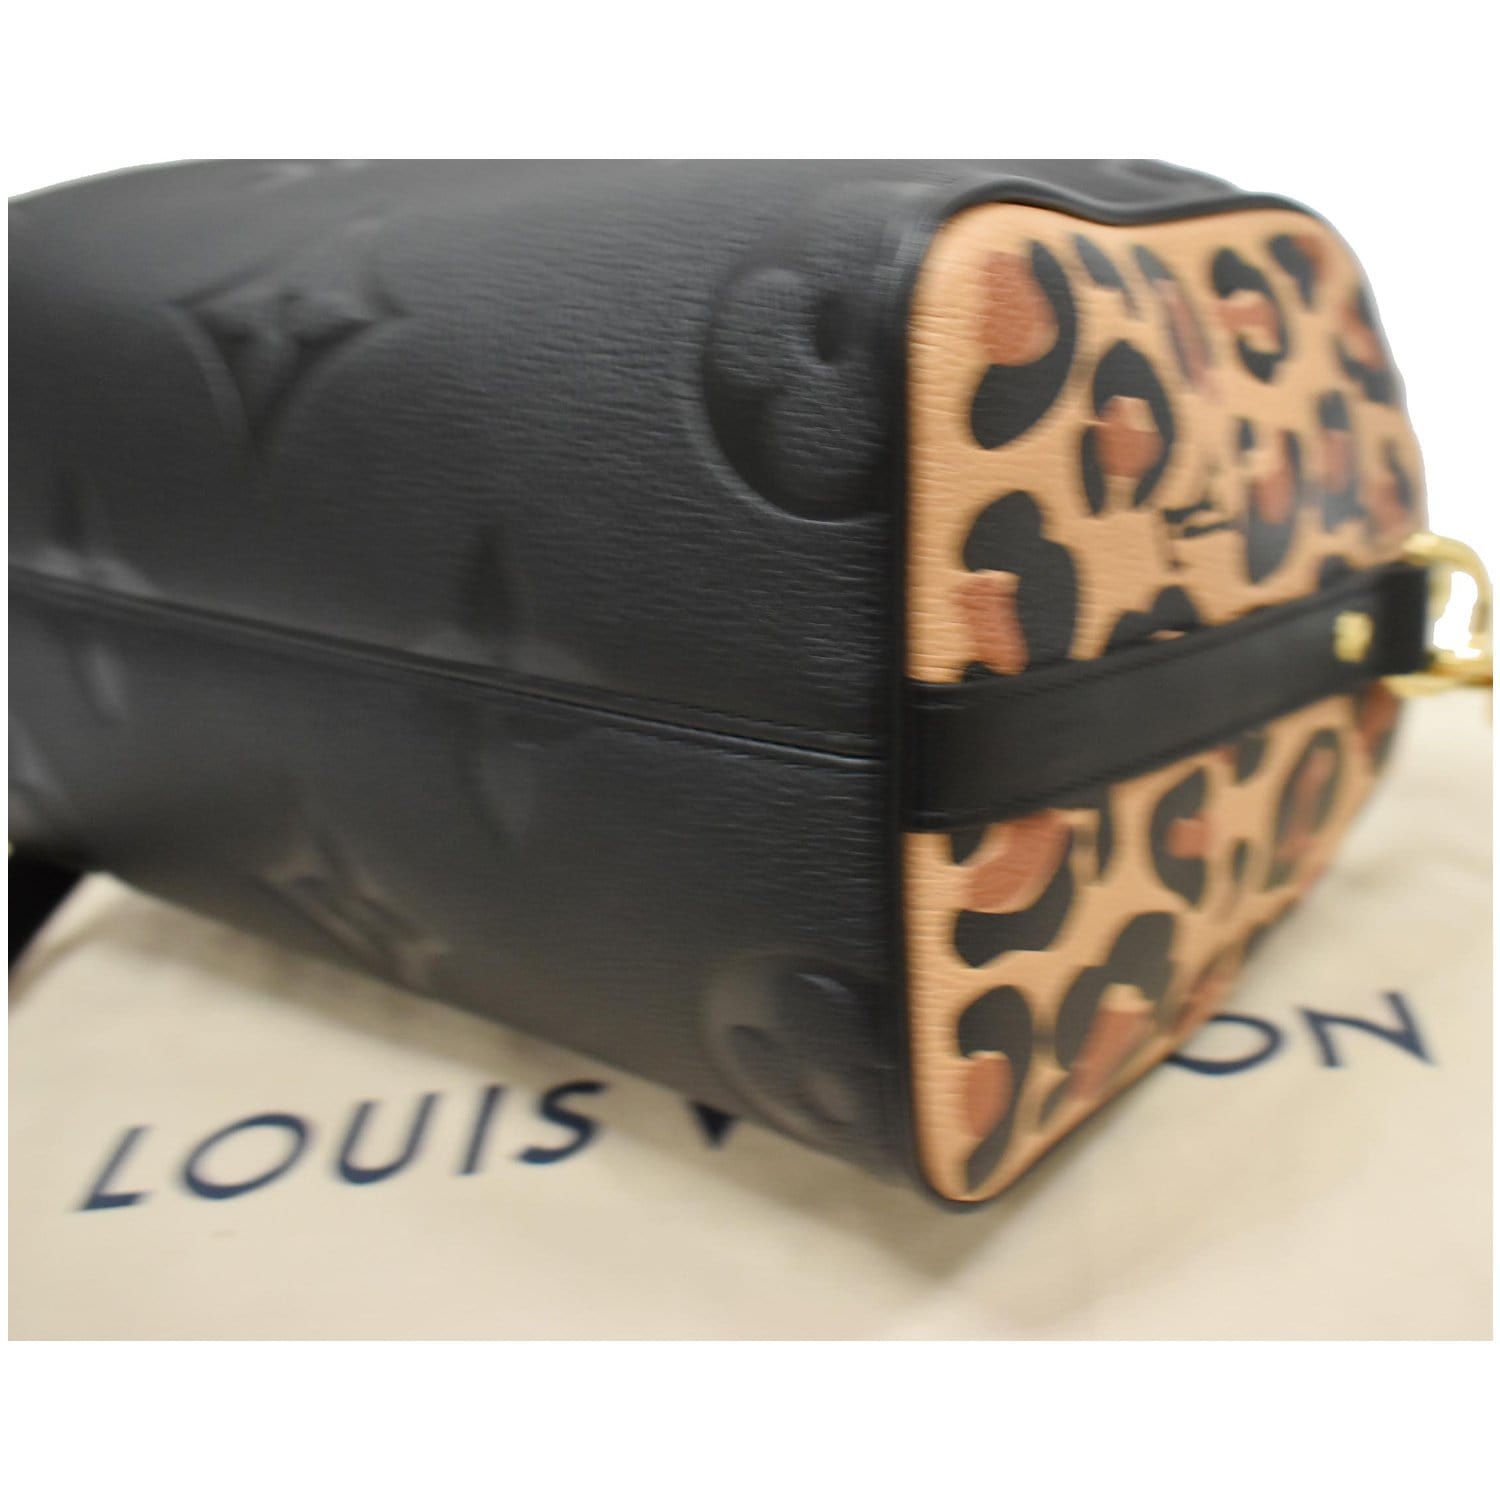 LOUIS VUITTON Speedy 25 Wild At Heart Leather Shoulder Bag Black - 20%